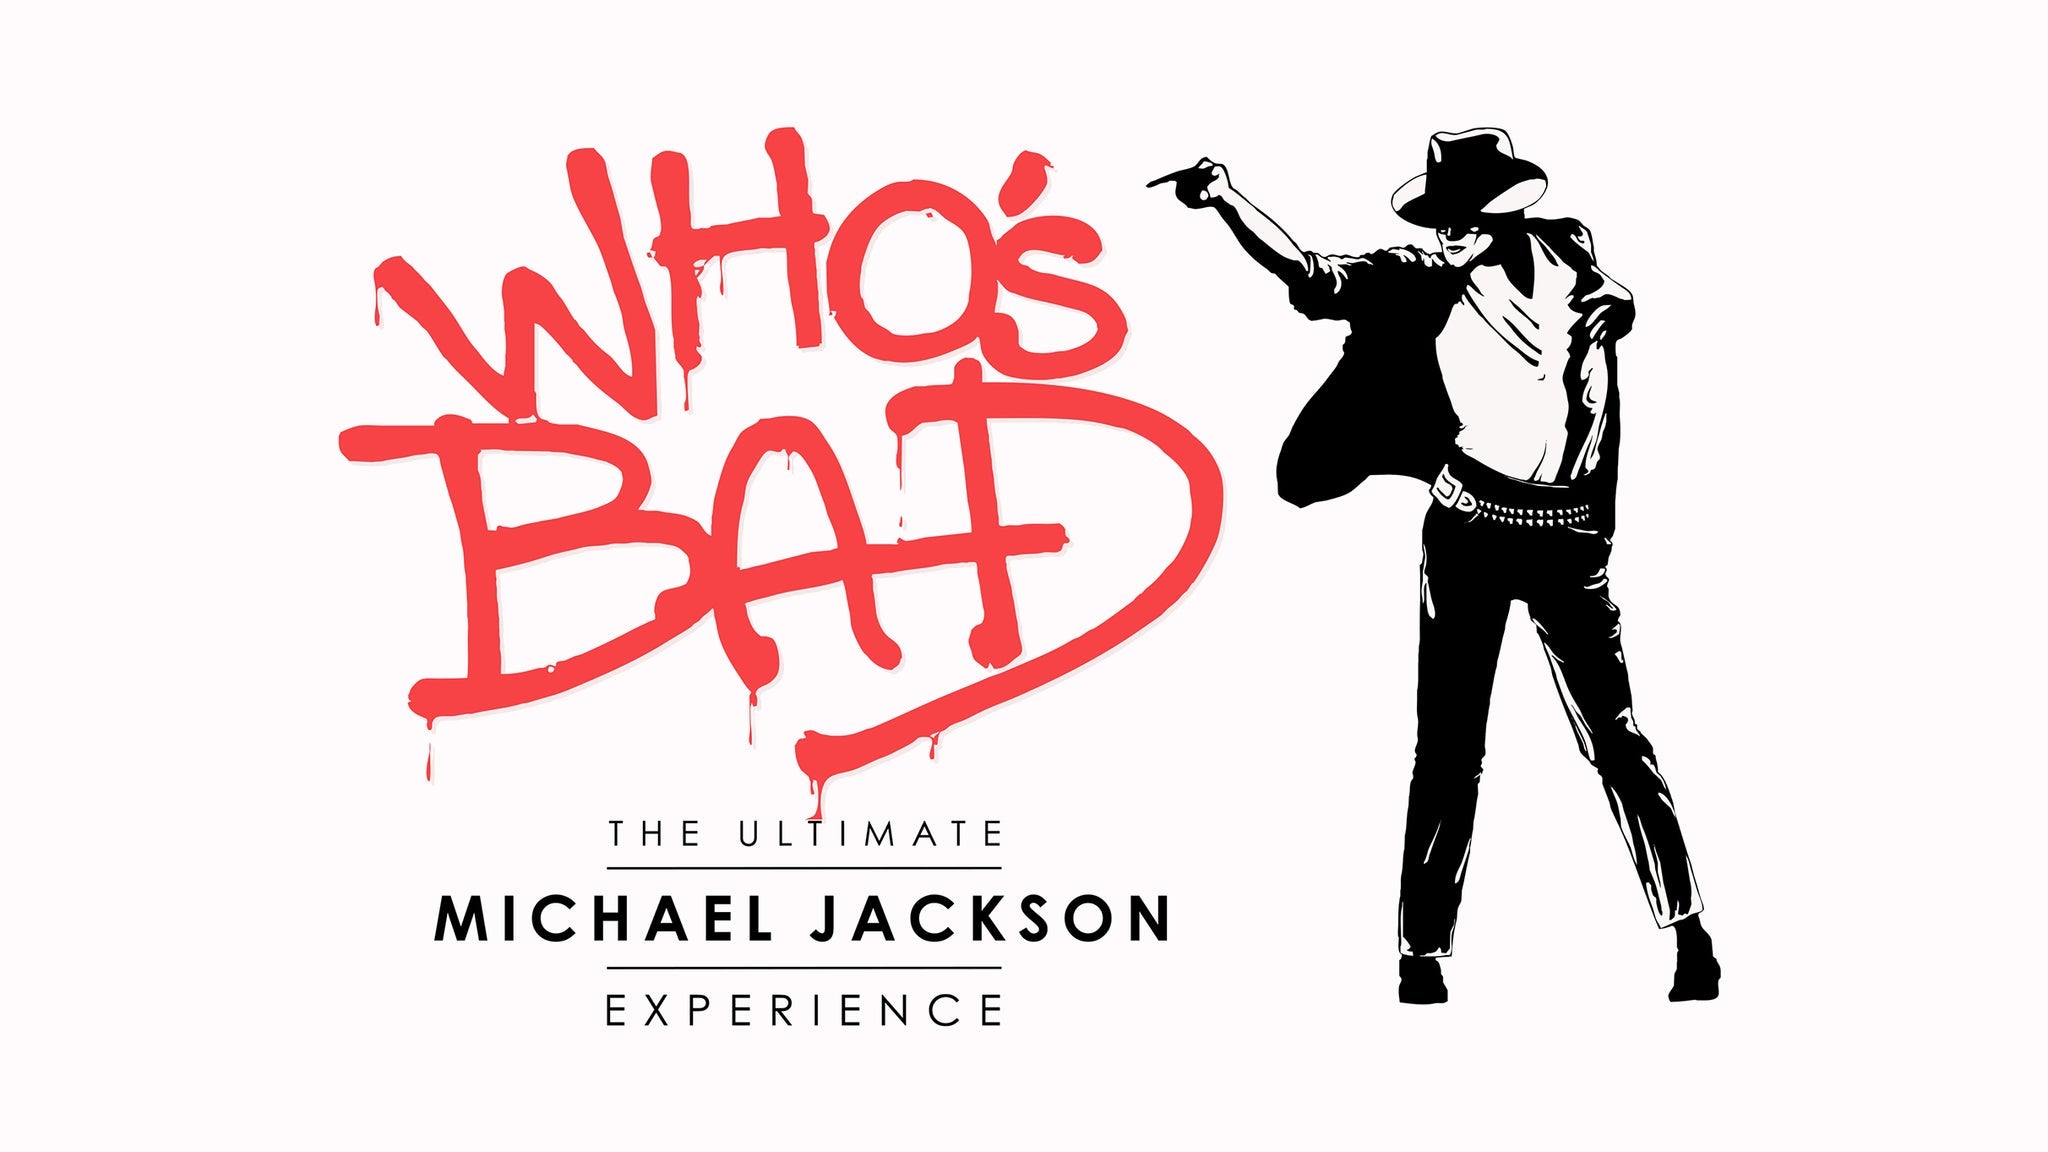 Michael Jackson - Billie Jean by krkdesigns on DeviantArt